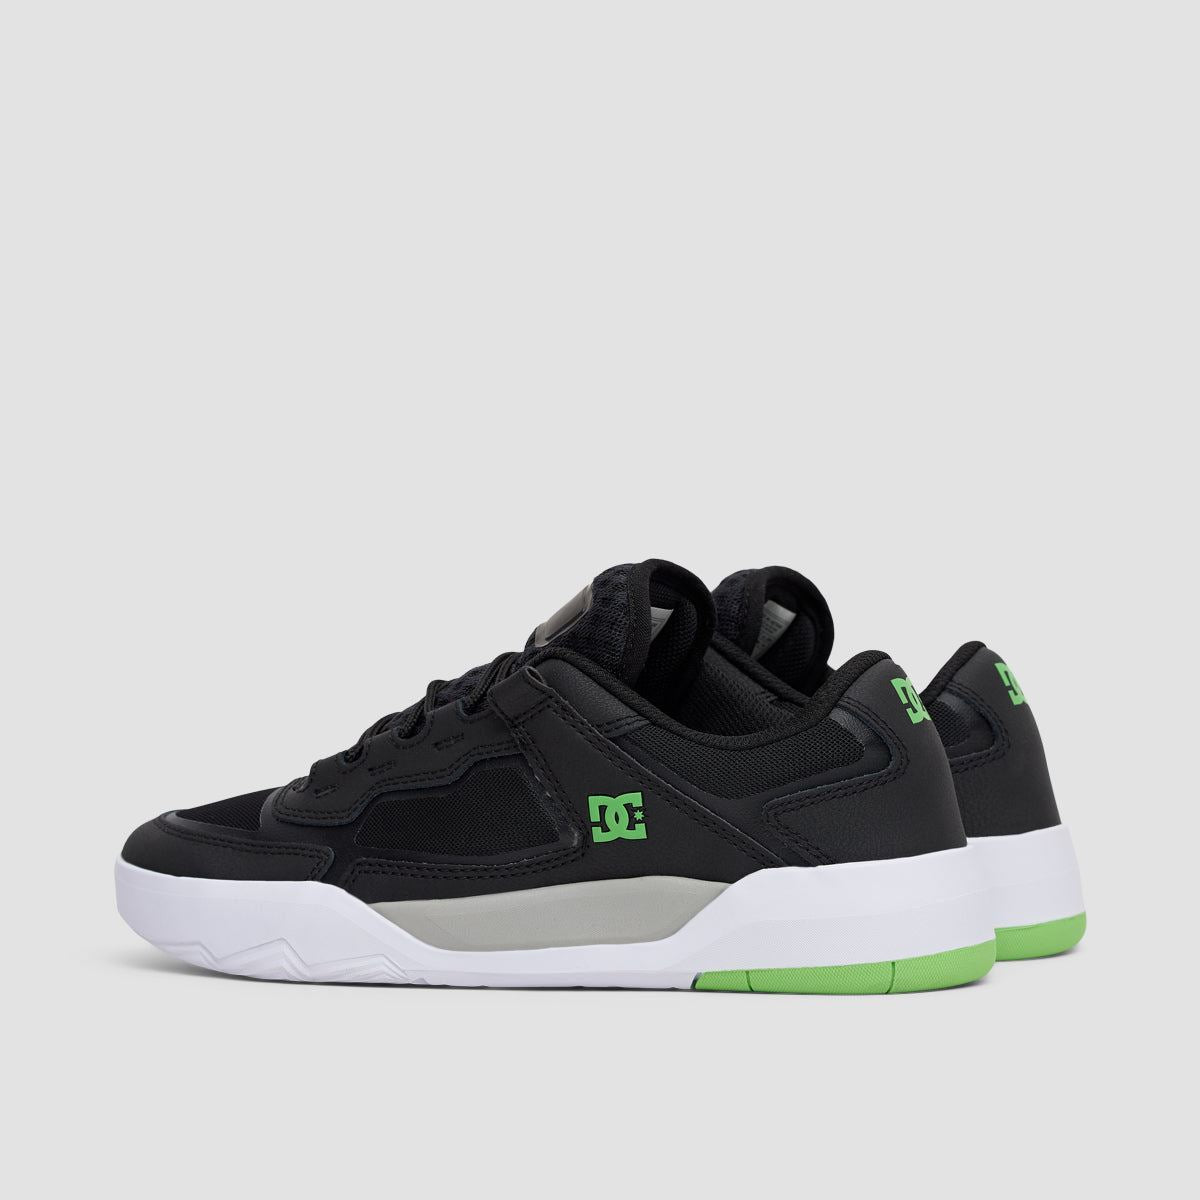 DC Metric Shoes - Black/Grey/Green